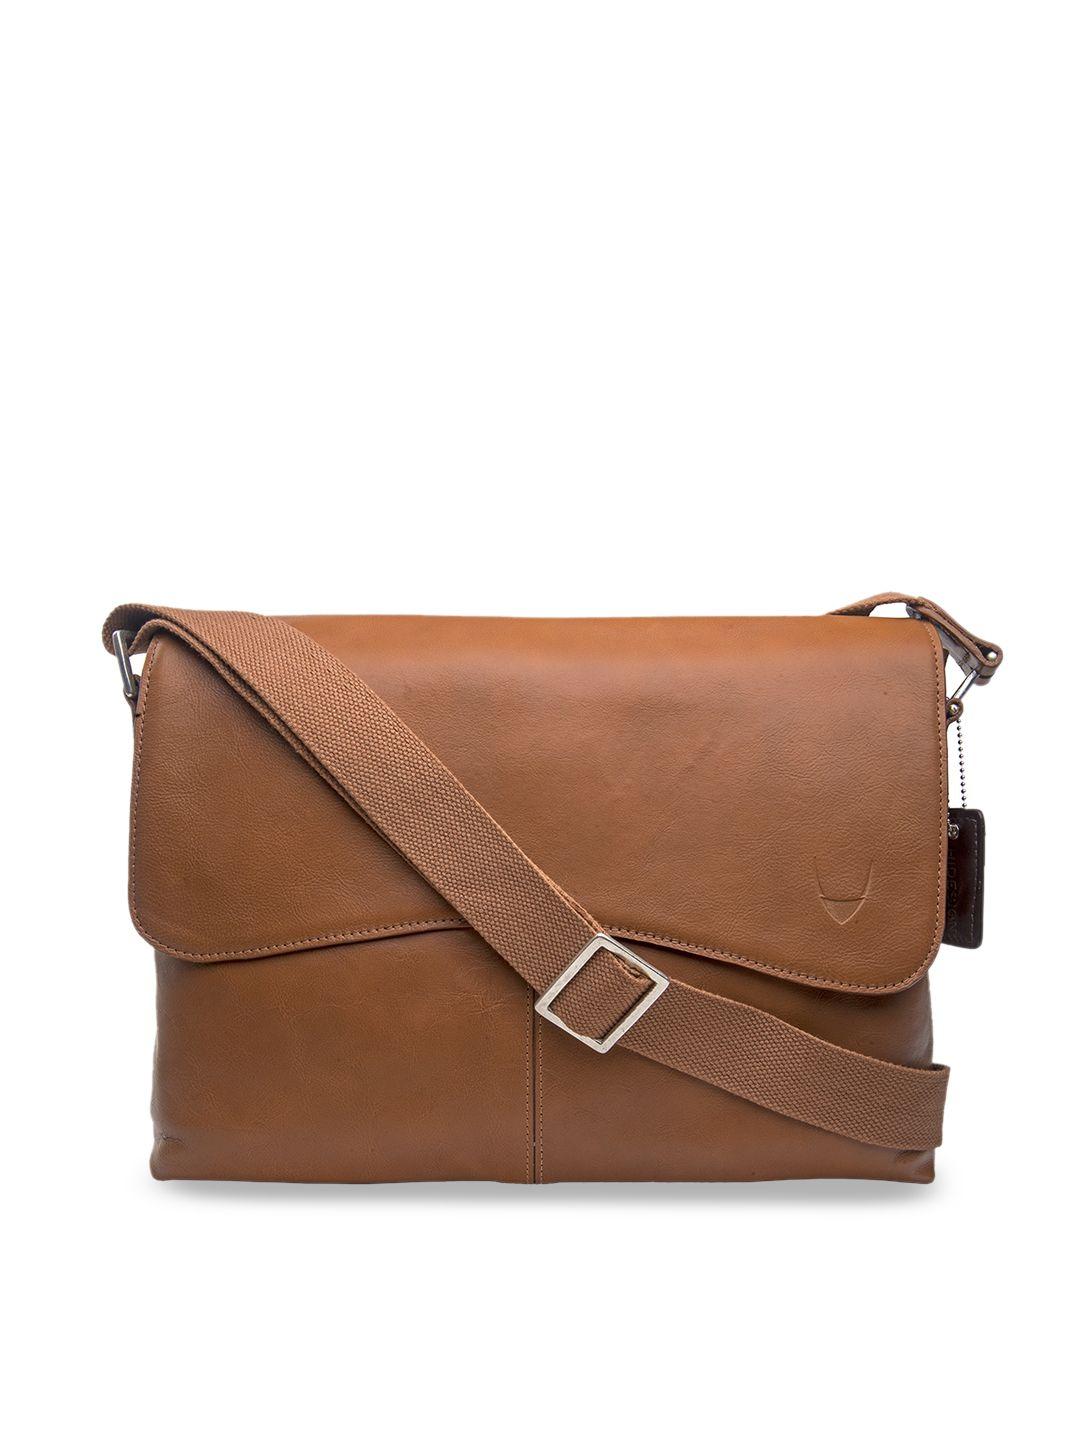 hidesign men tan brown solid messenger leather bag